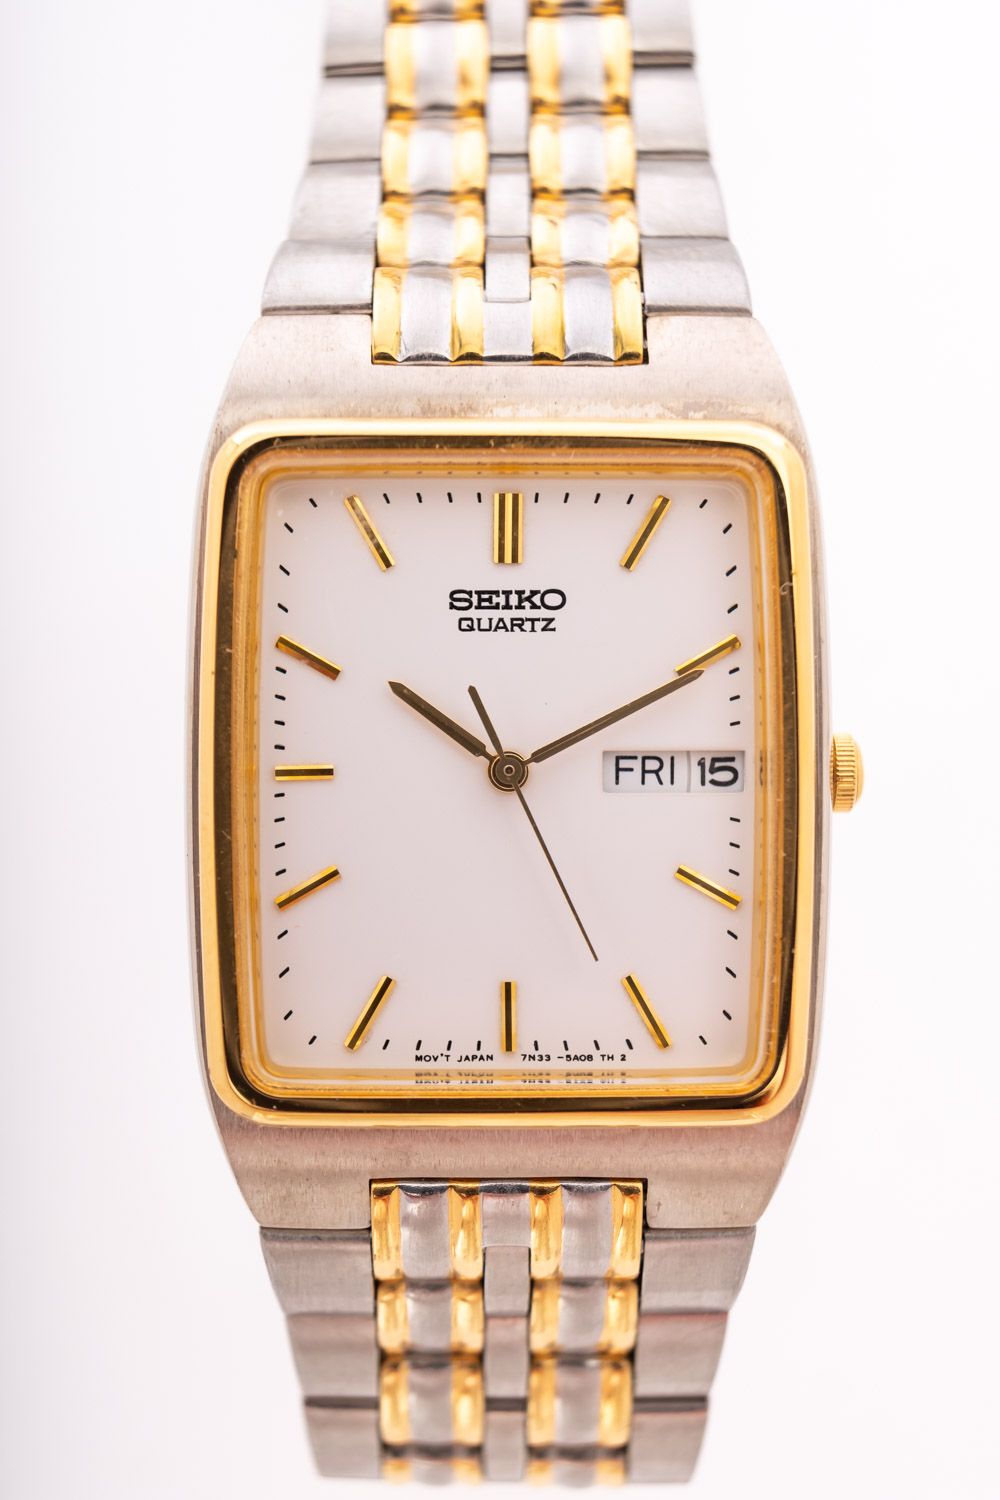 Seiko Kinetic a gentleman's stainless-steel wristwatch the rectangular dial signed Seiko Quartz